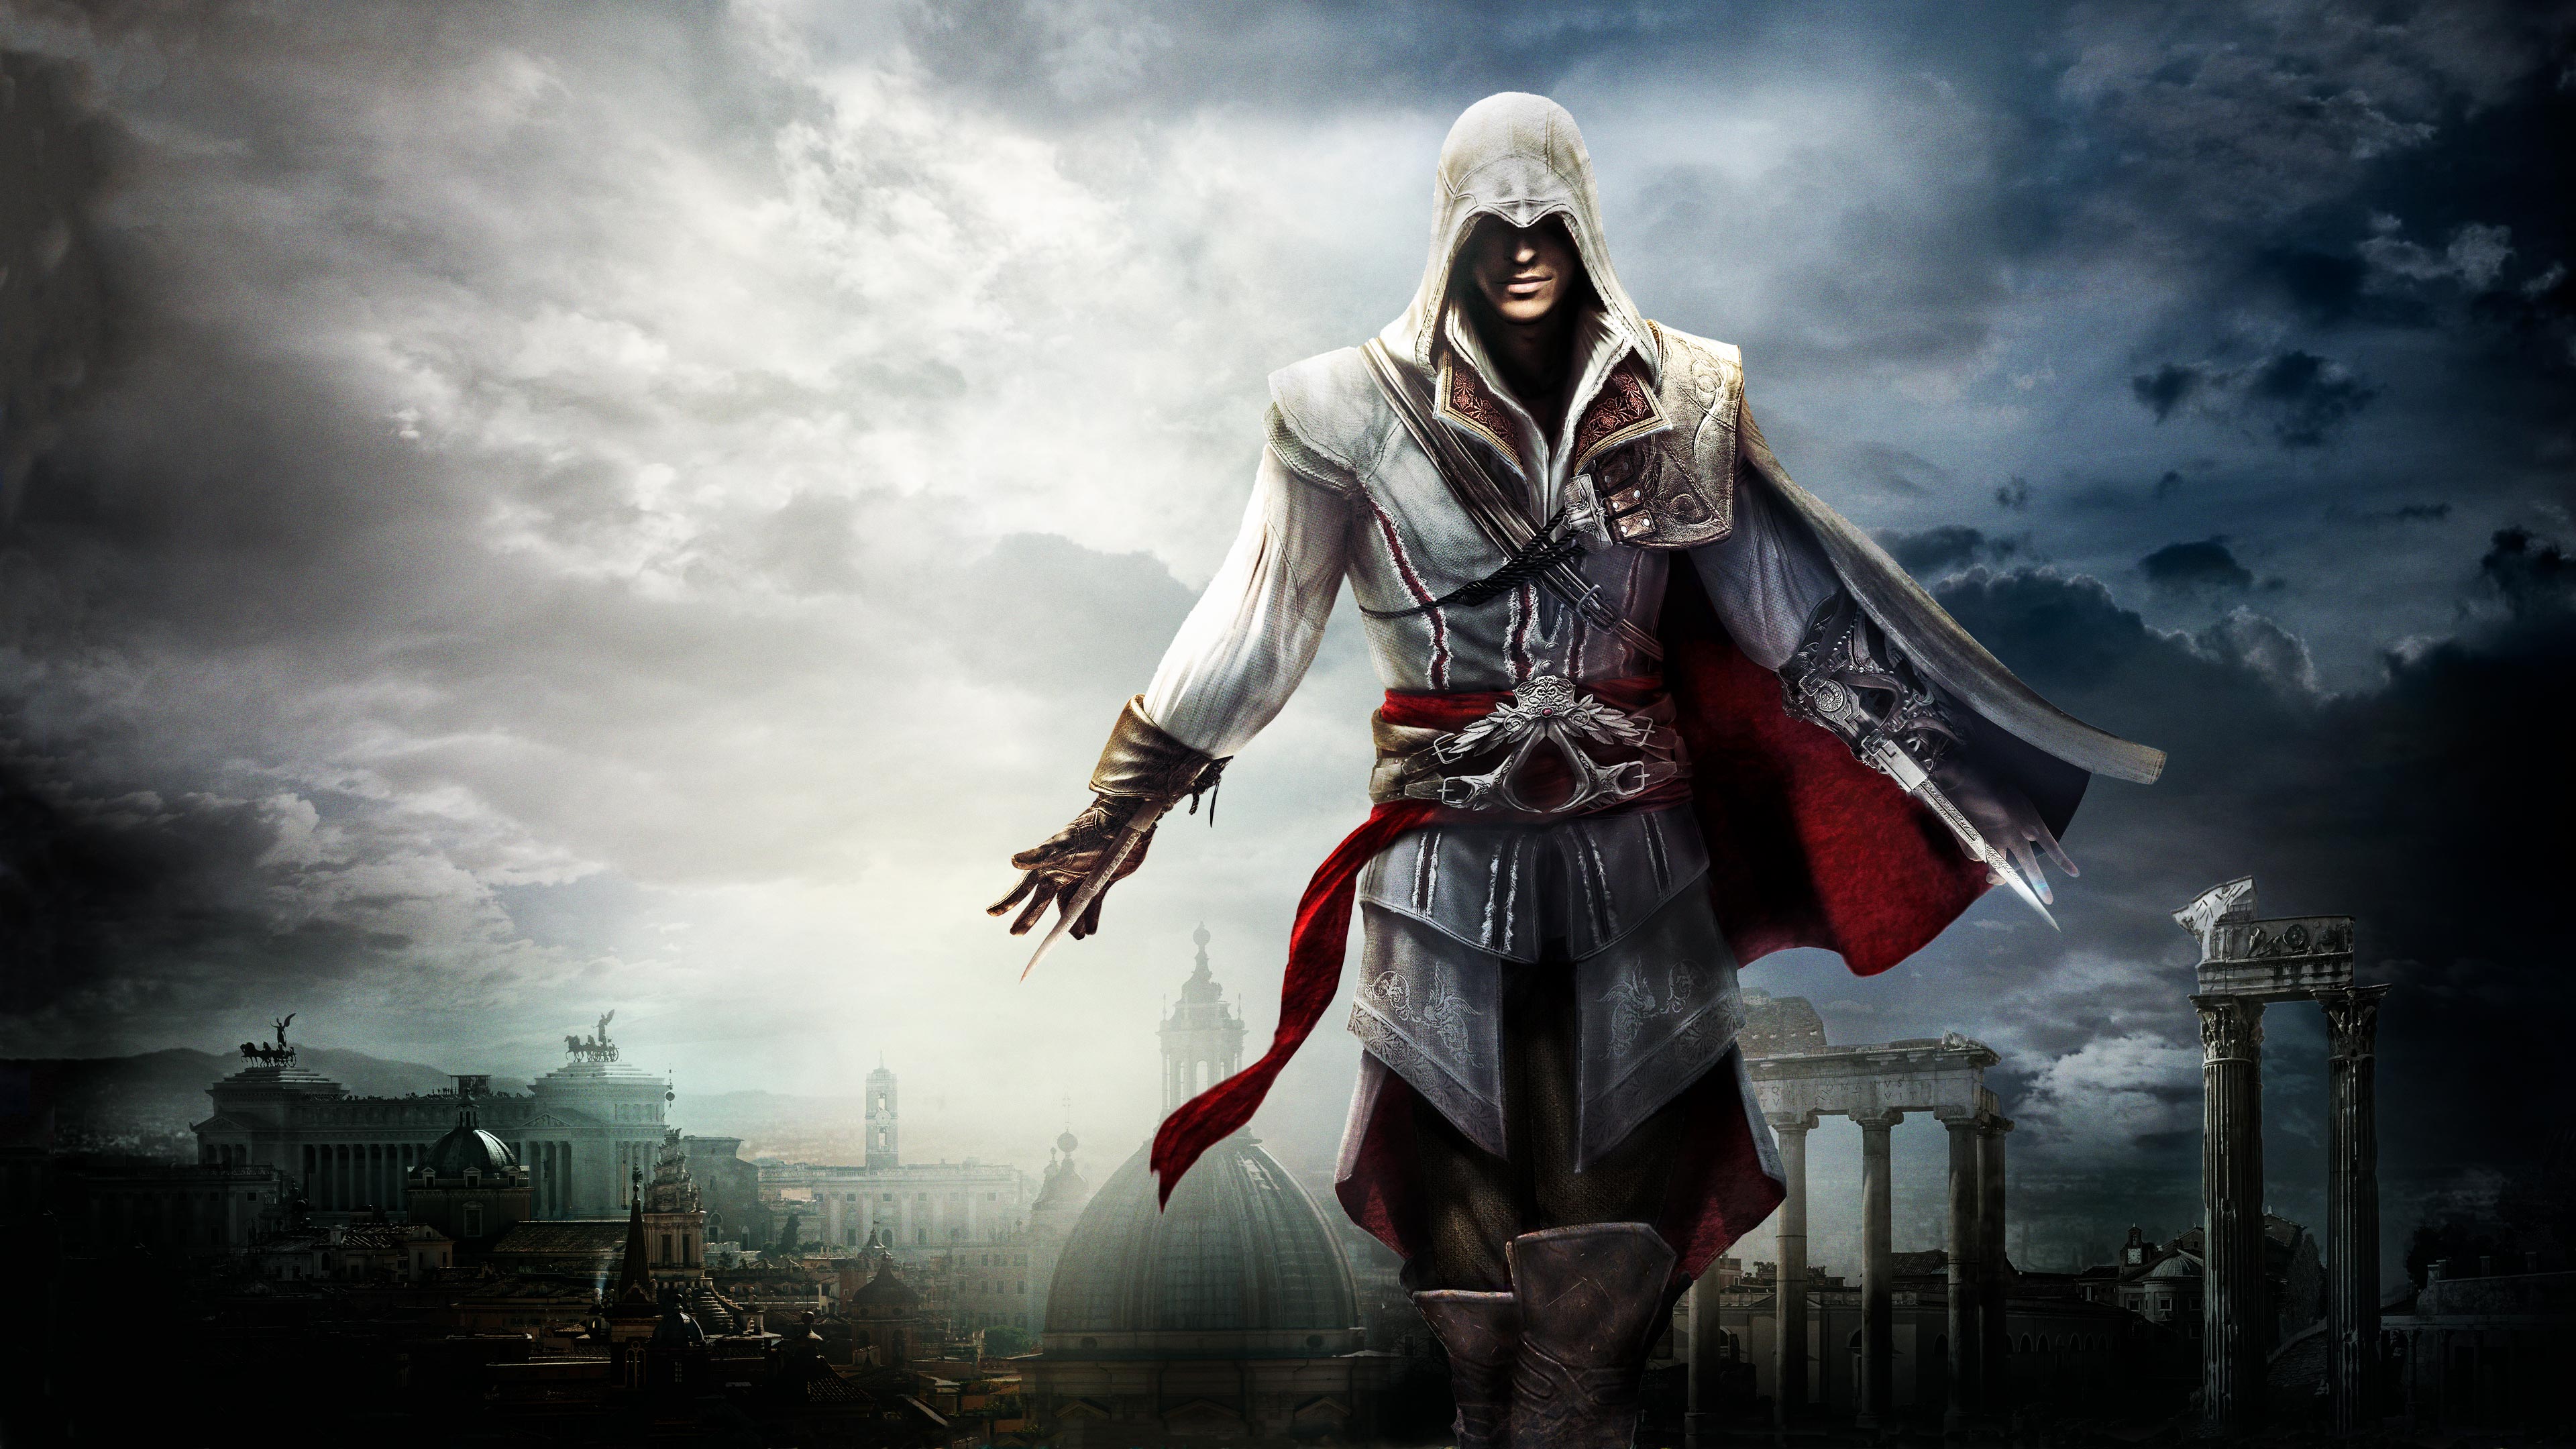 Assassin's Creed 2 - Ezio's Trilogy Alternative Poster, Koke